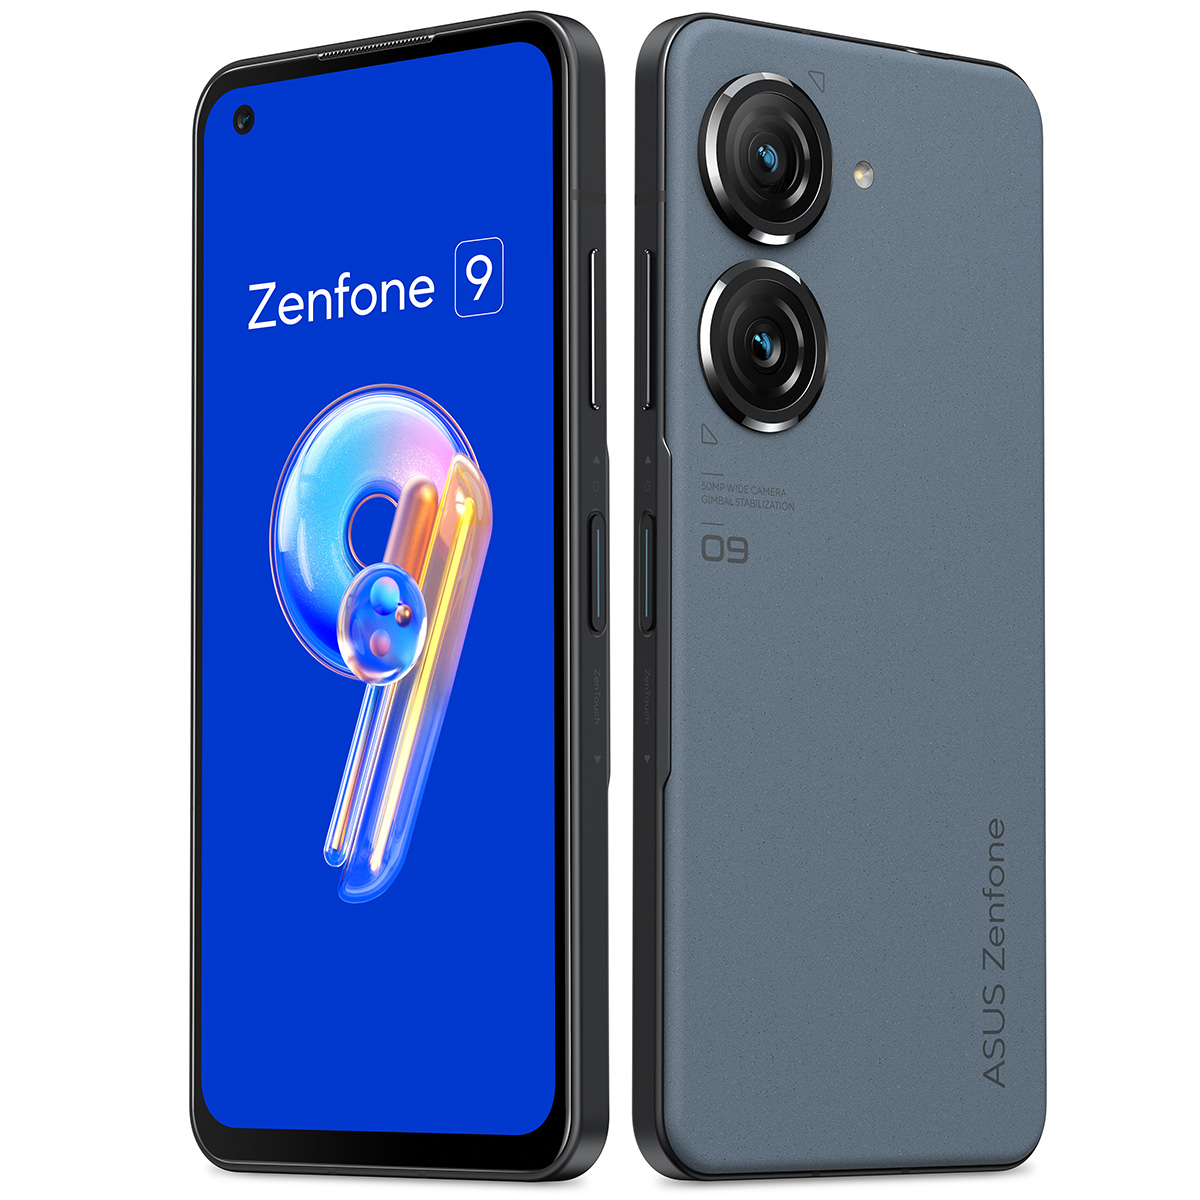 Zenfone9 SIMフリー・純正ケース・付属品付き